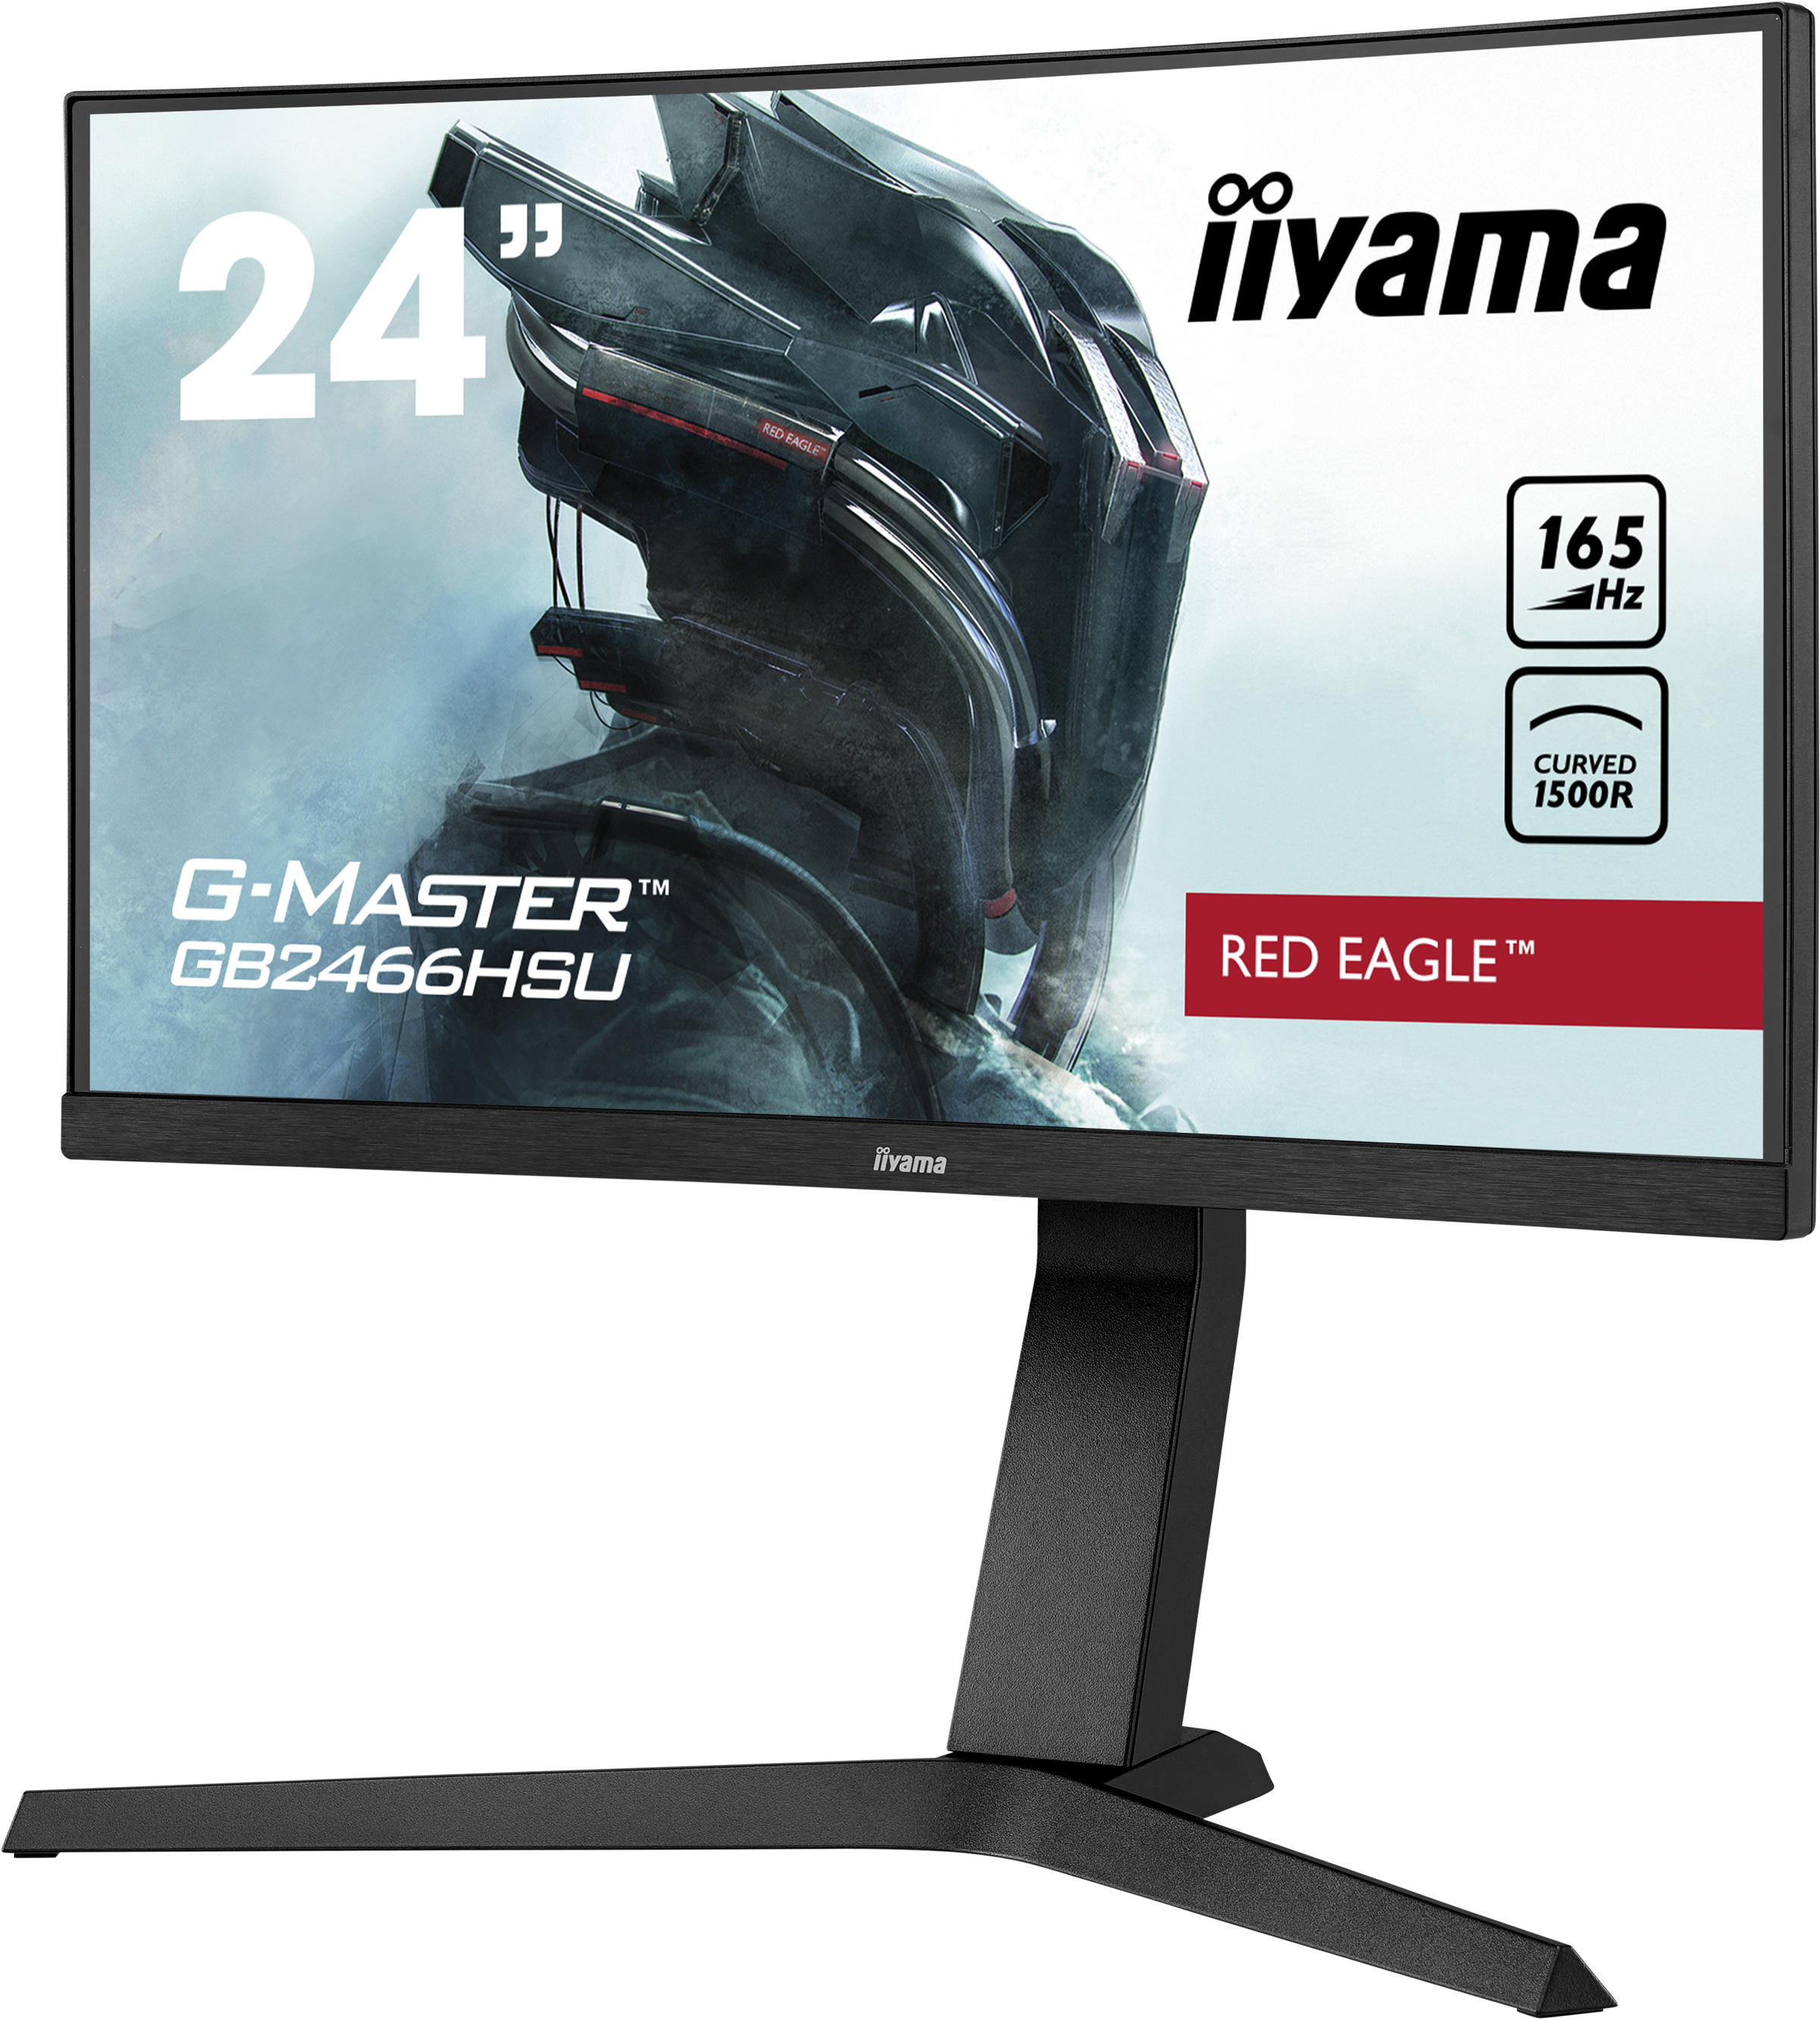 Iiyama G-MASTER GB2466HSU-B1  RED EAGLE | 24" | 165Hz | Curved Gaming Monitor